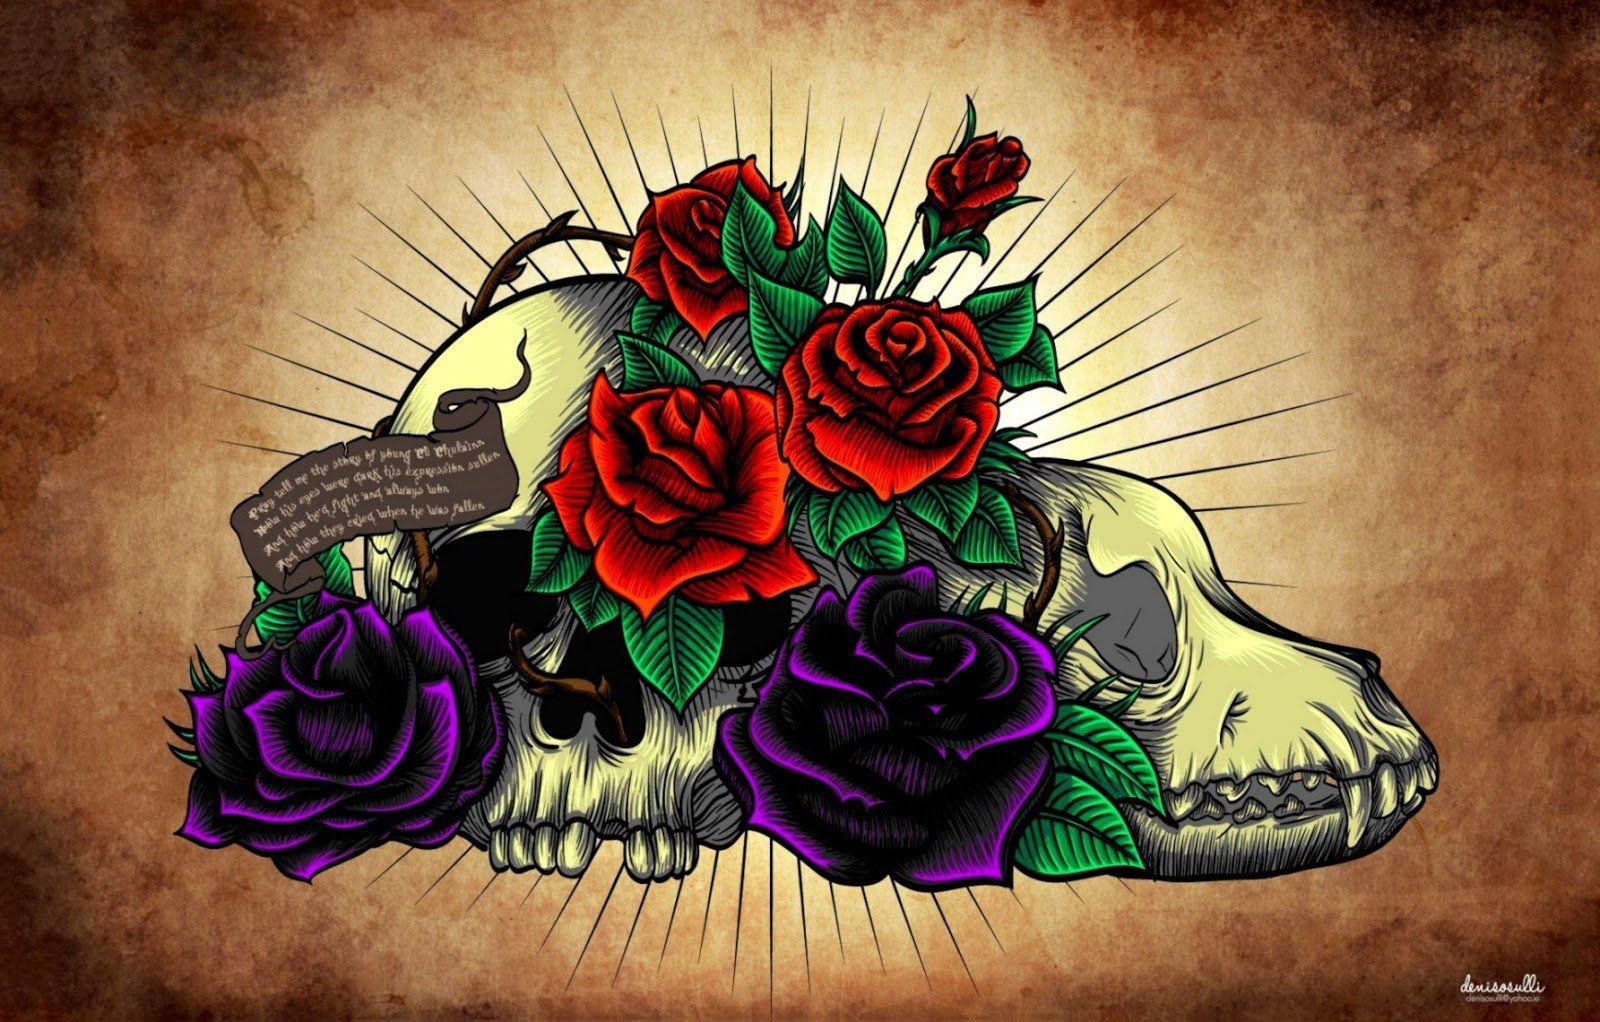 Wallpaper Skull And Roses Tumblr